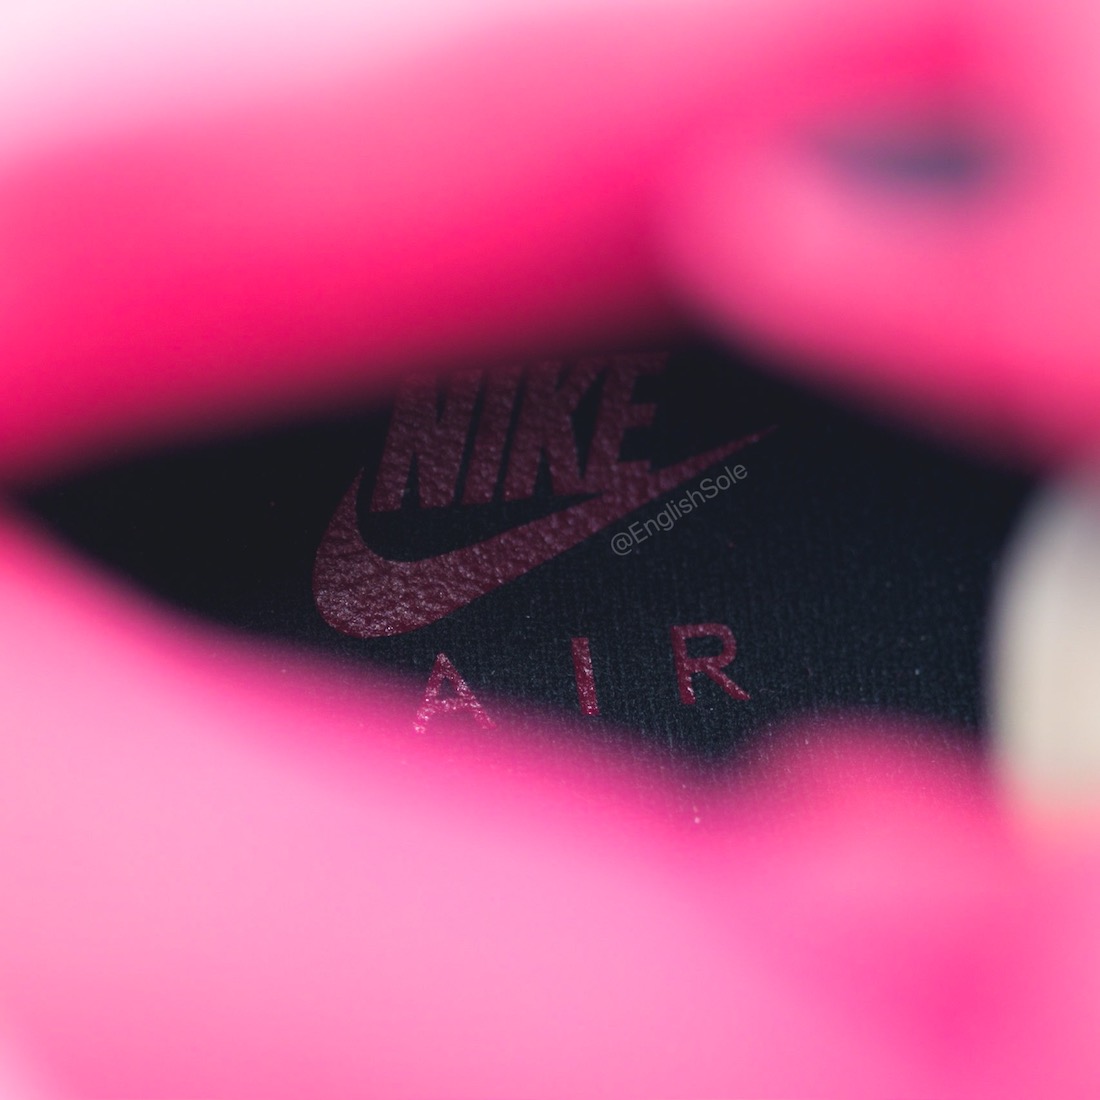 Nike Air, NIKE, Jordan Brand, Jordan 5, Jordan, Air Jordan 5 PE, Air Jordan 5, Air Jordan